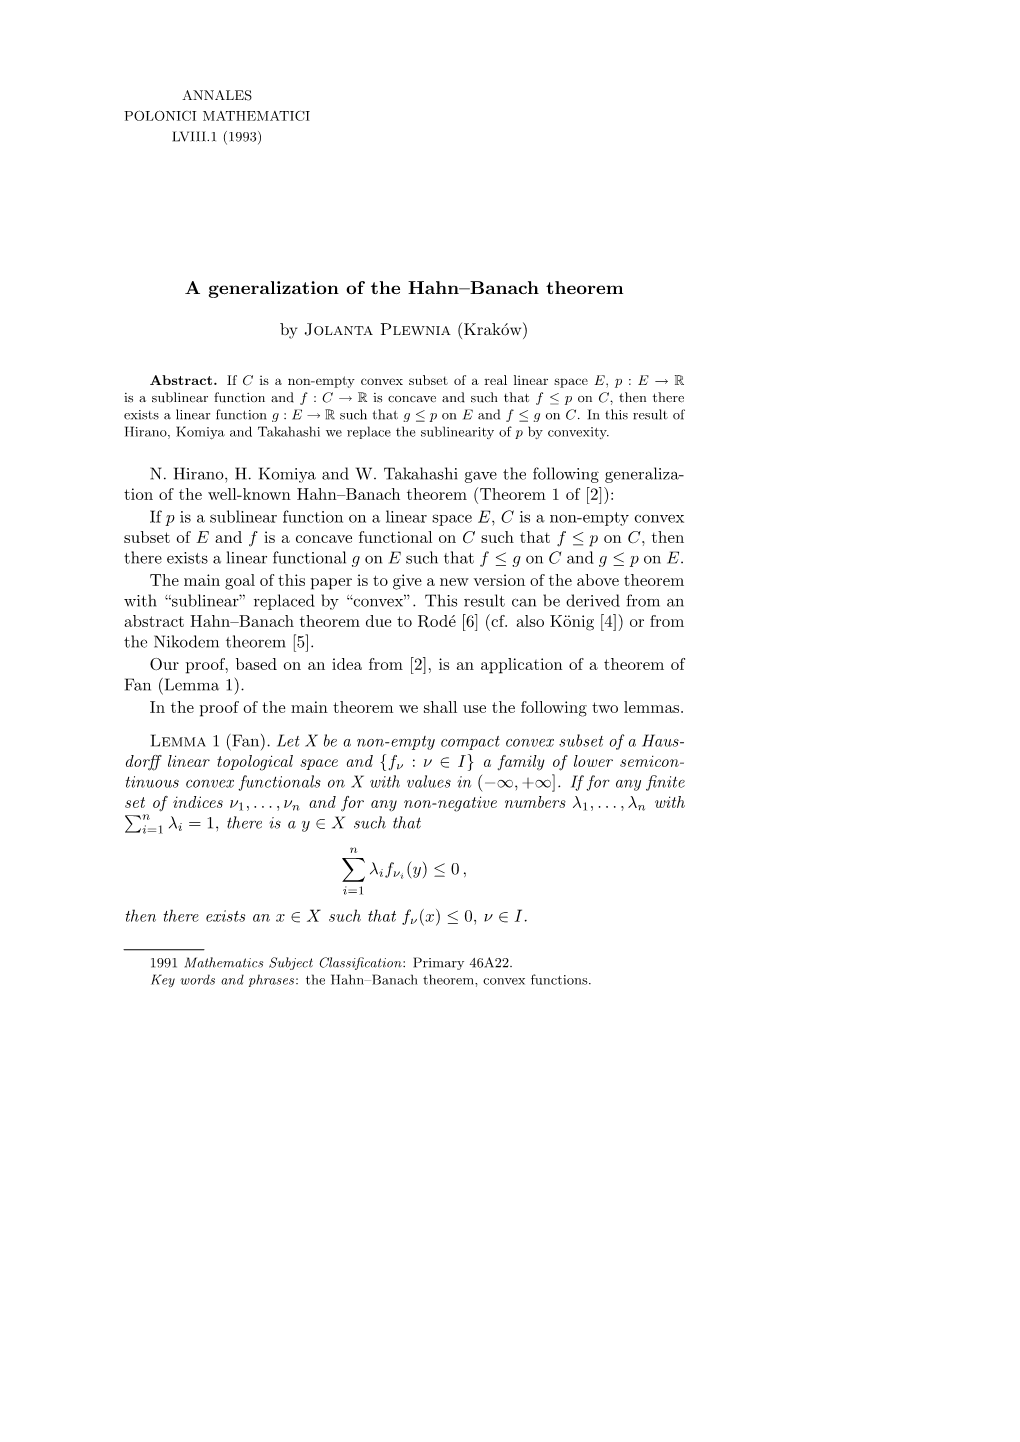 A Generalization of the Hahn–Banach Theorem